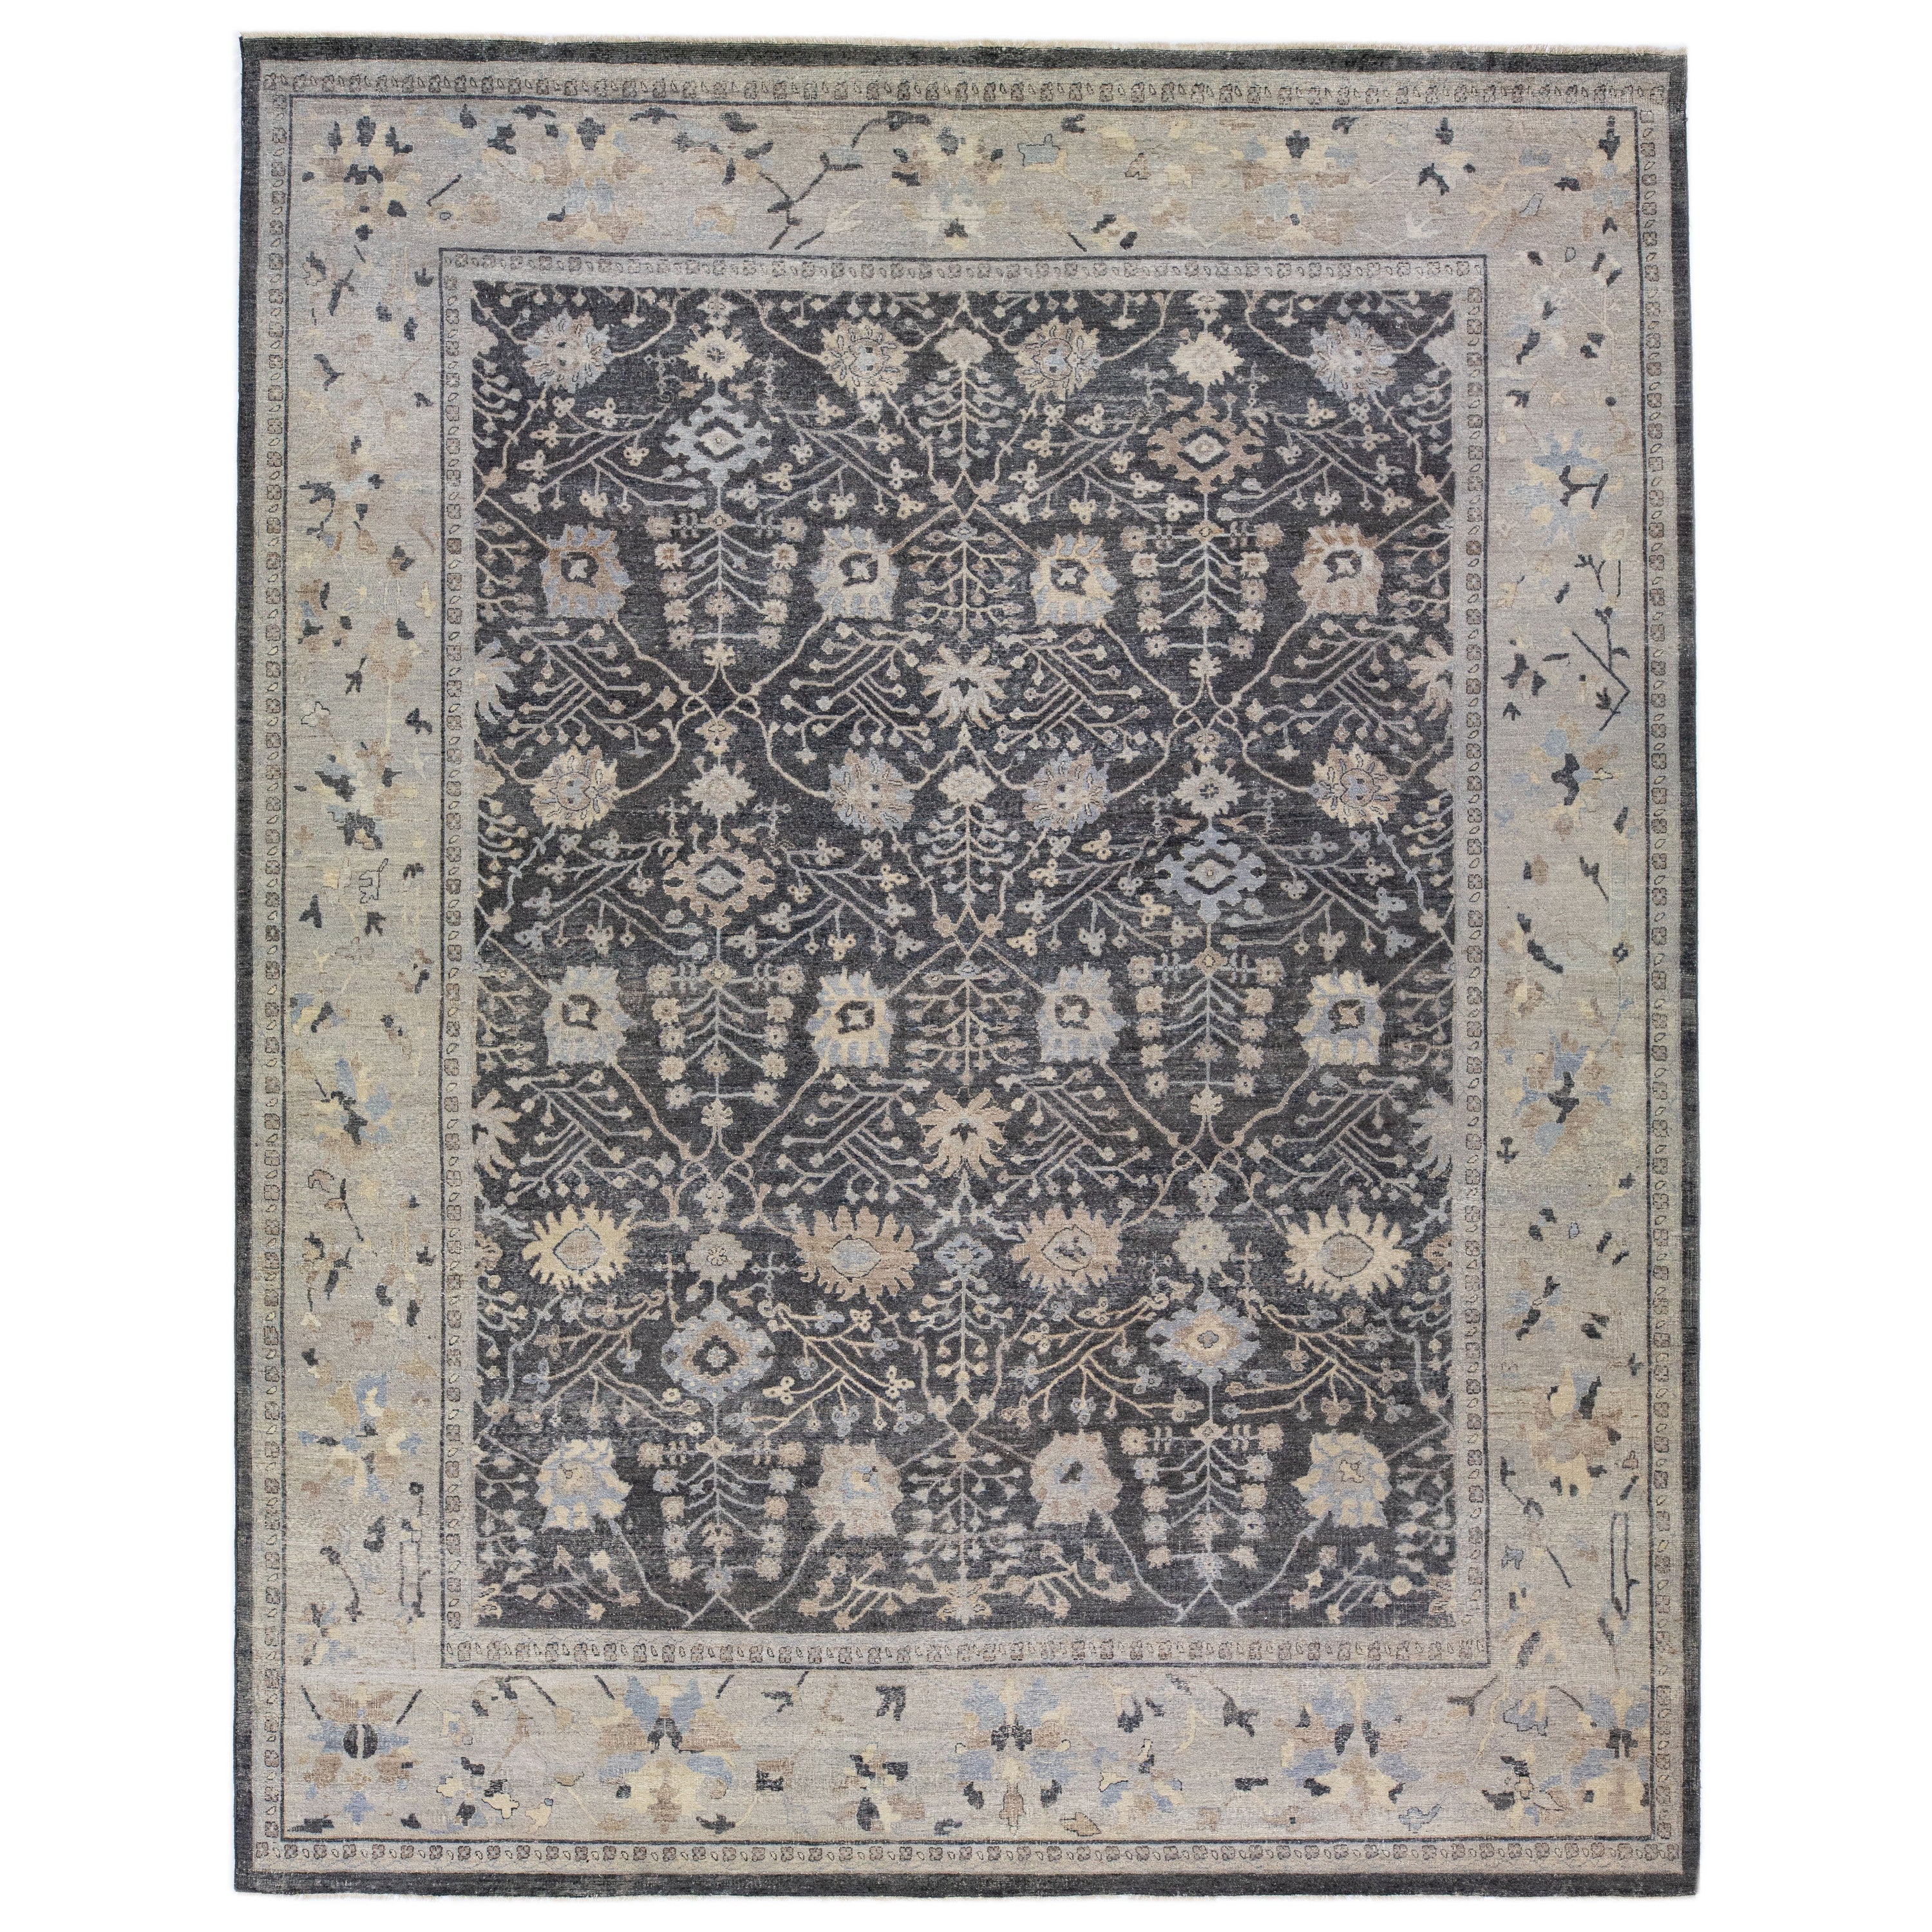 Apadana's Artisan Collection Handmade Charcoal Wool Rug with Allover Motif